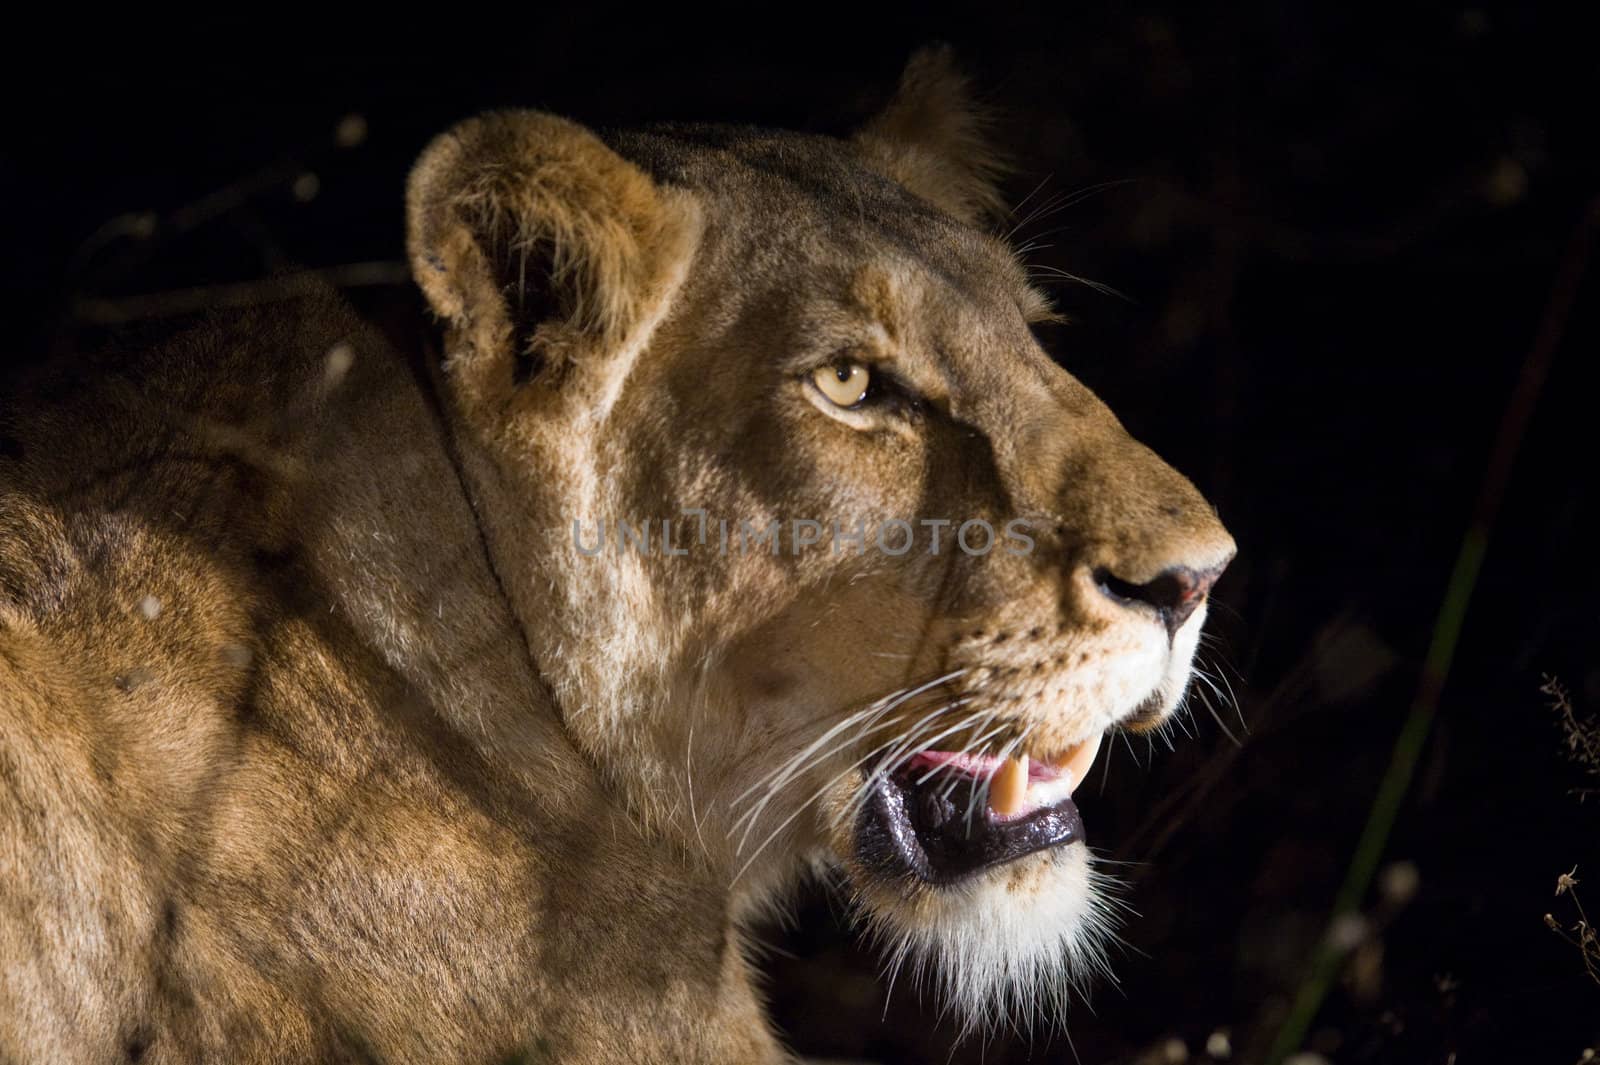 Female lion at night by edan